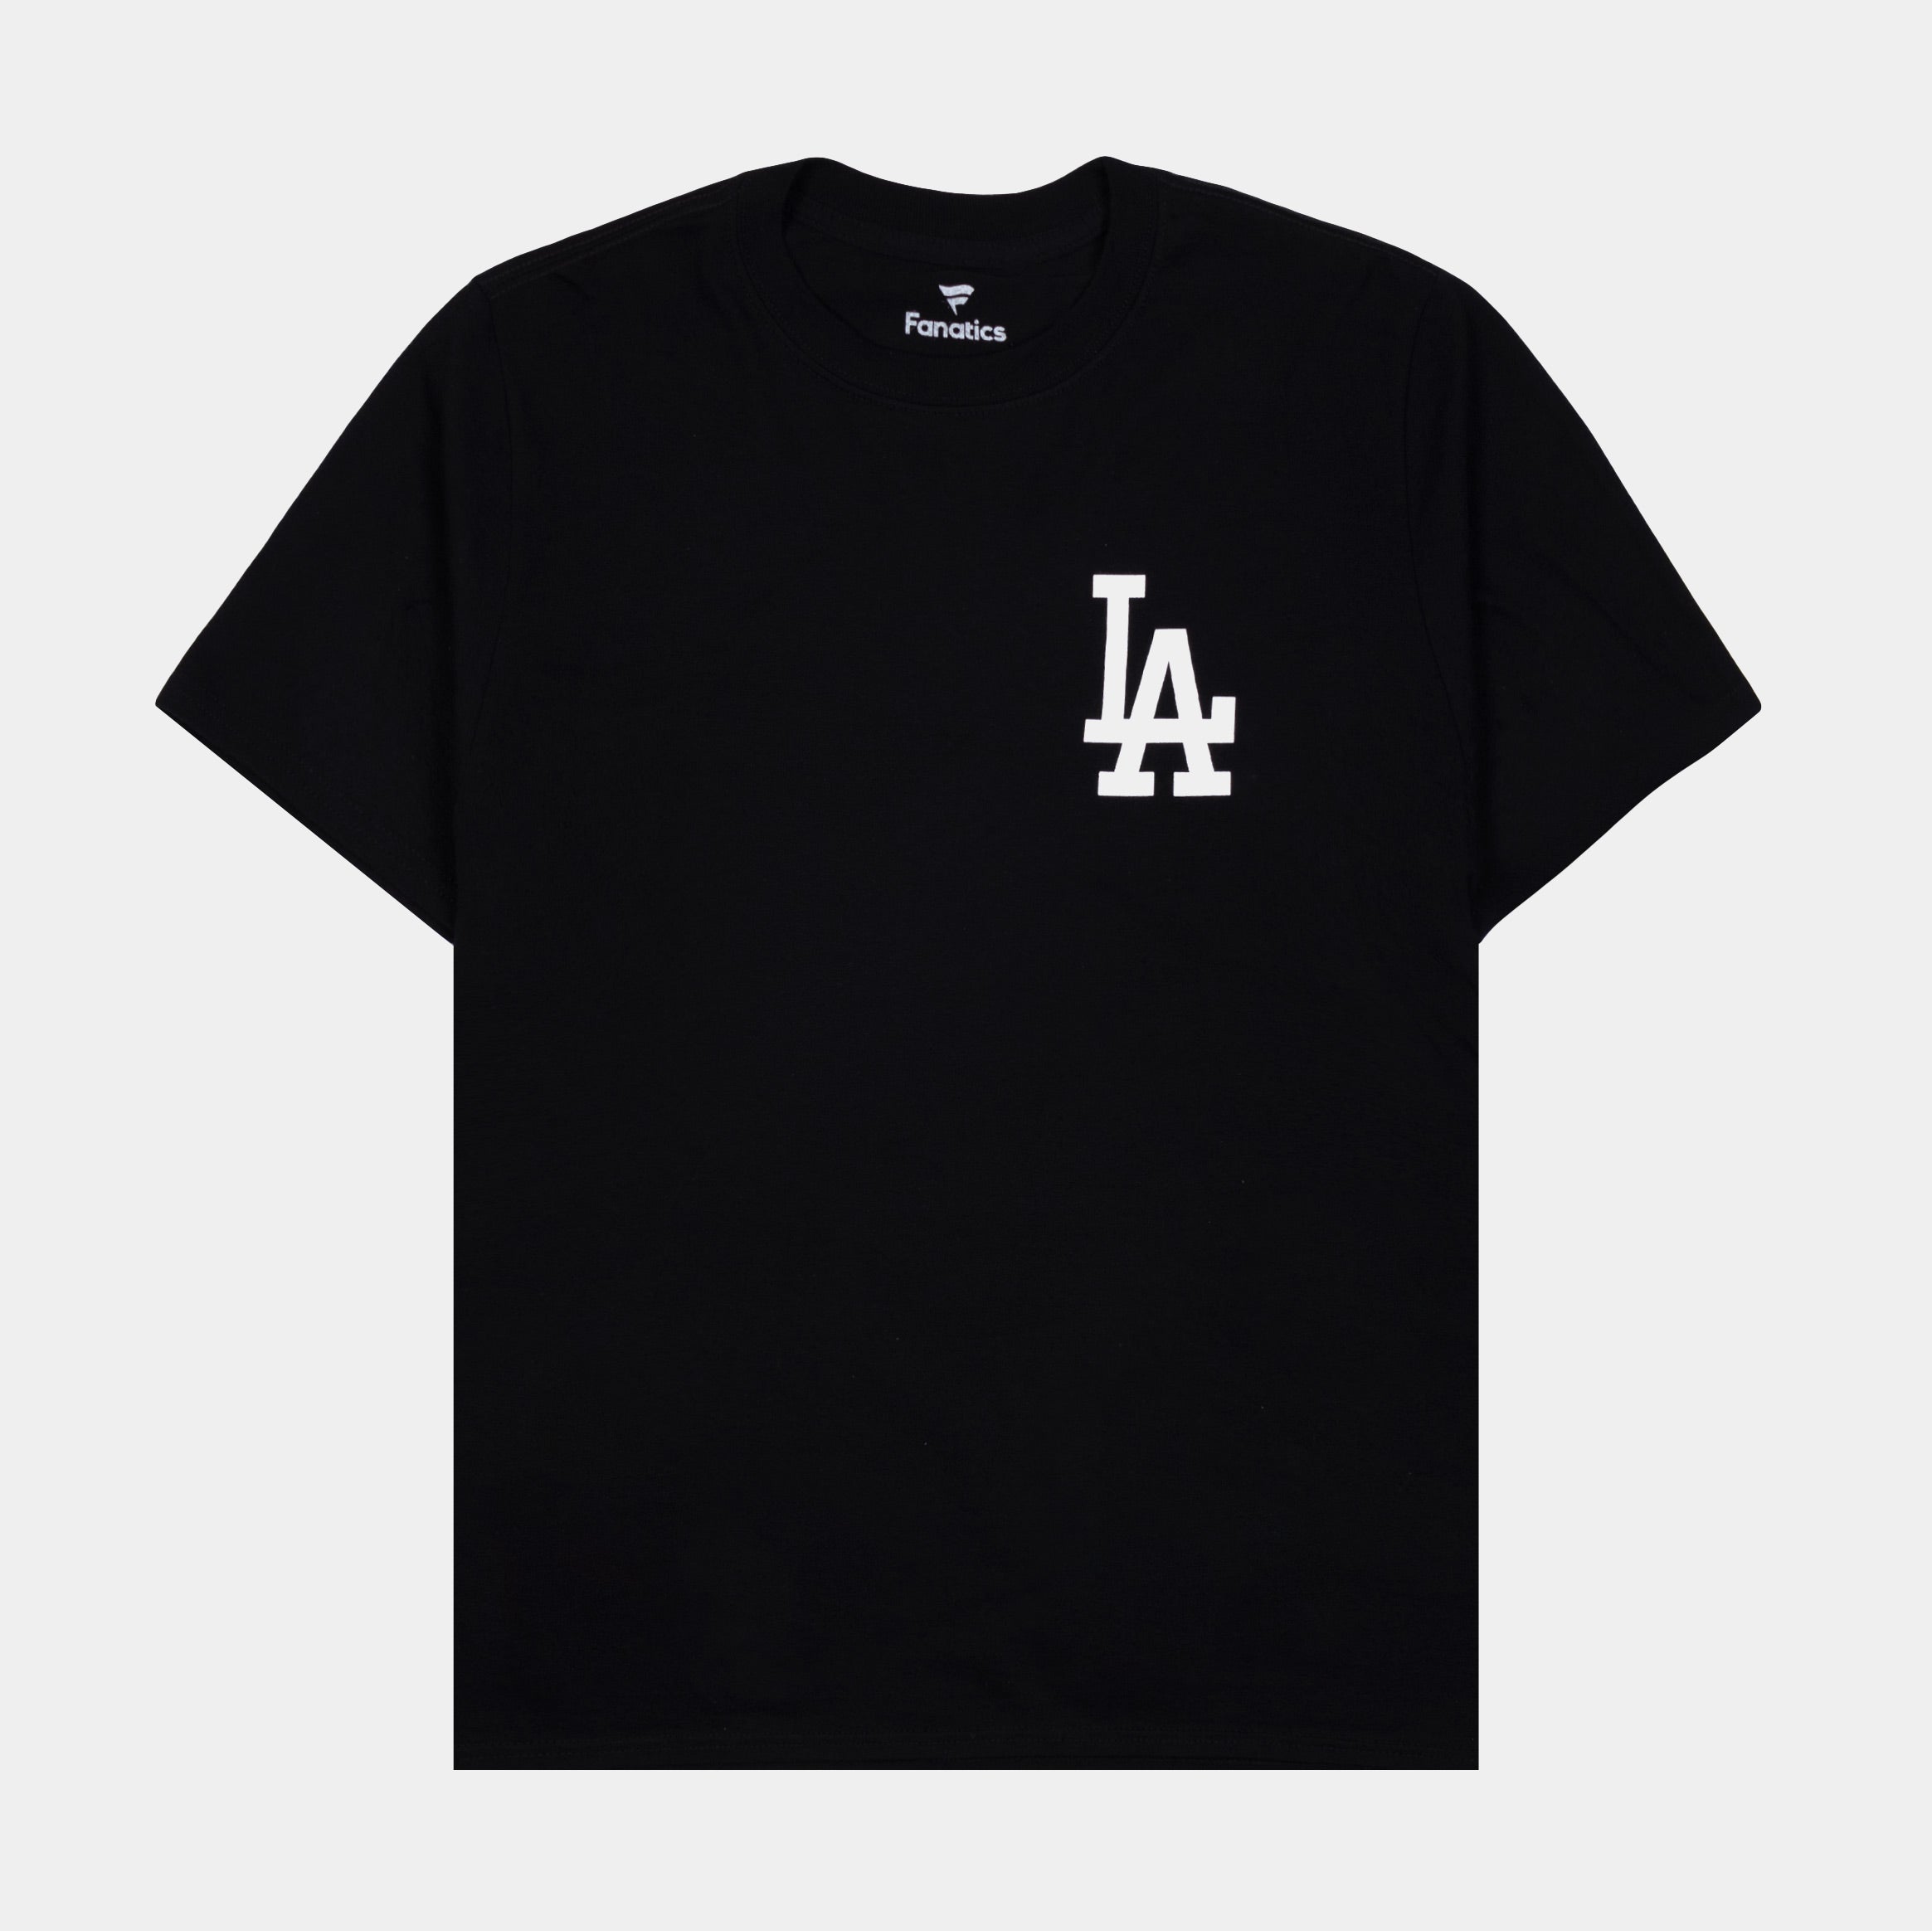 New Era Los Angeles Dodgers Throwback Mens Short Sleeve Shirt Beige Blue  60334723 – Shoe Palace